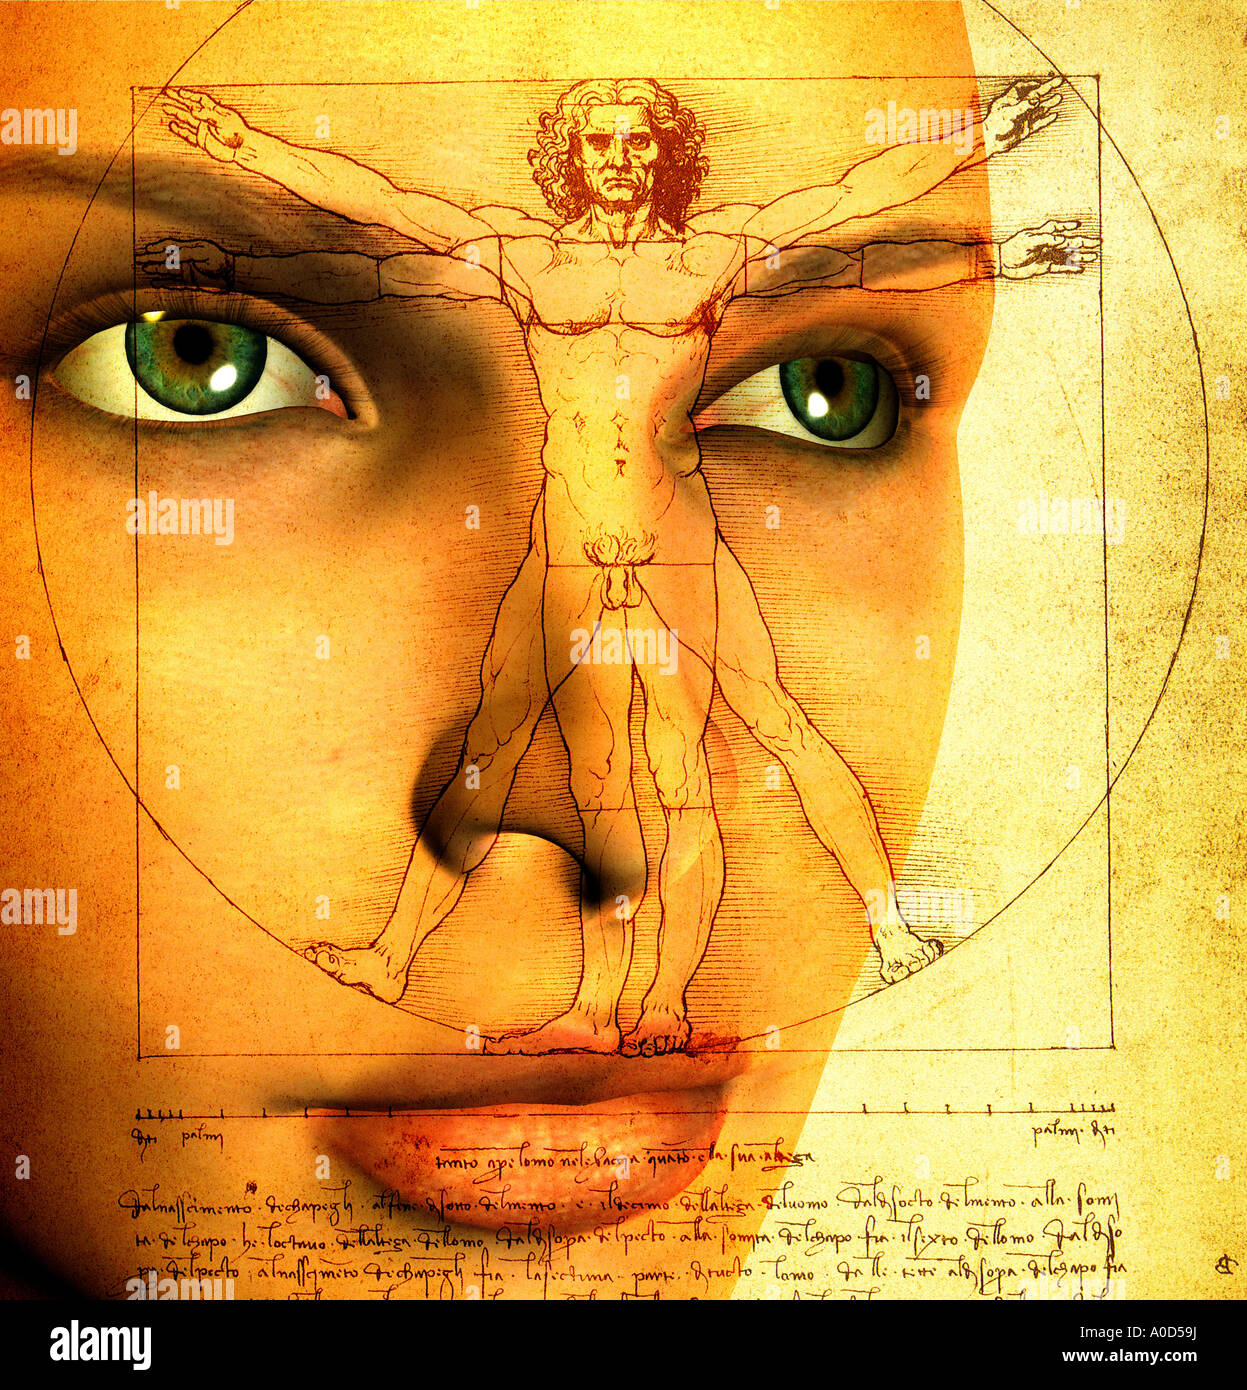 Vitruvian man sketch by Leonardo da Vinci composited on computer generated  female robot face Stock Photo - Alamy